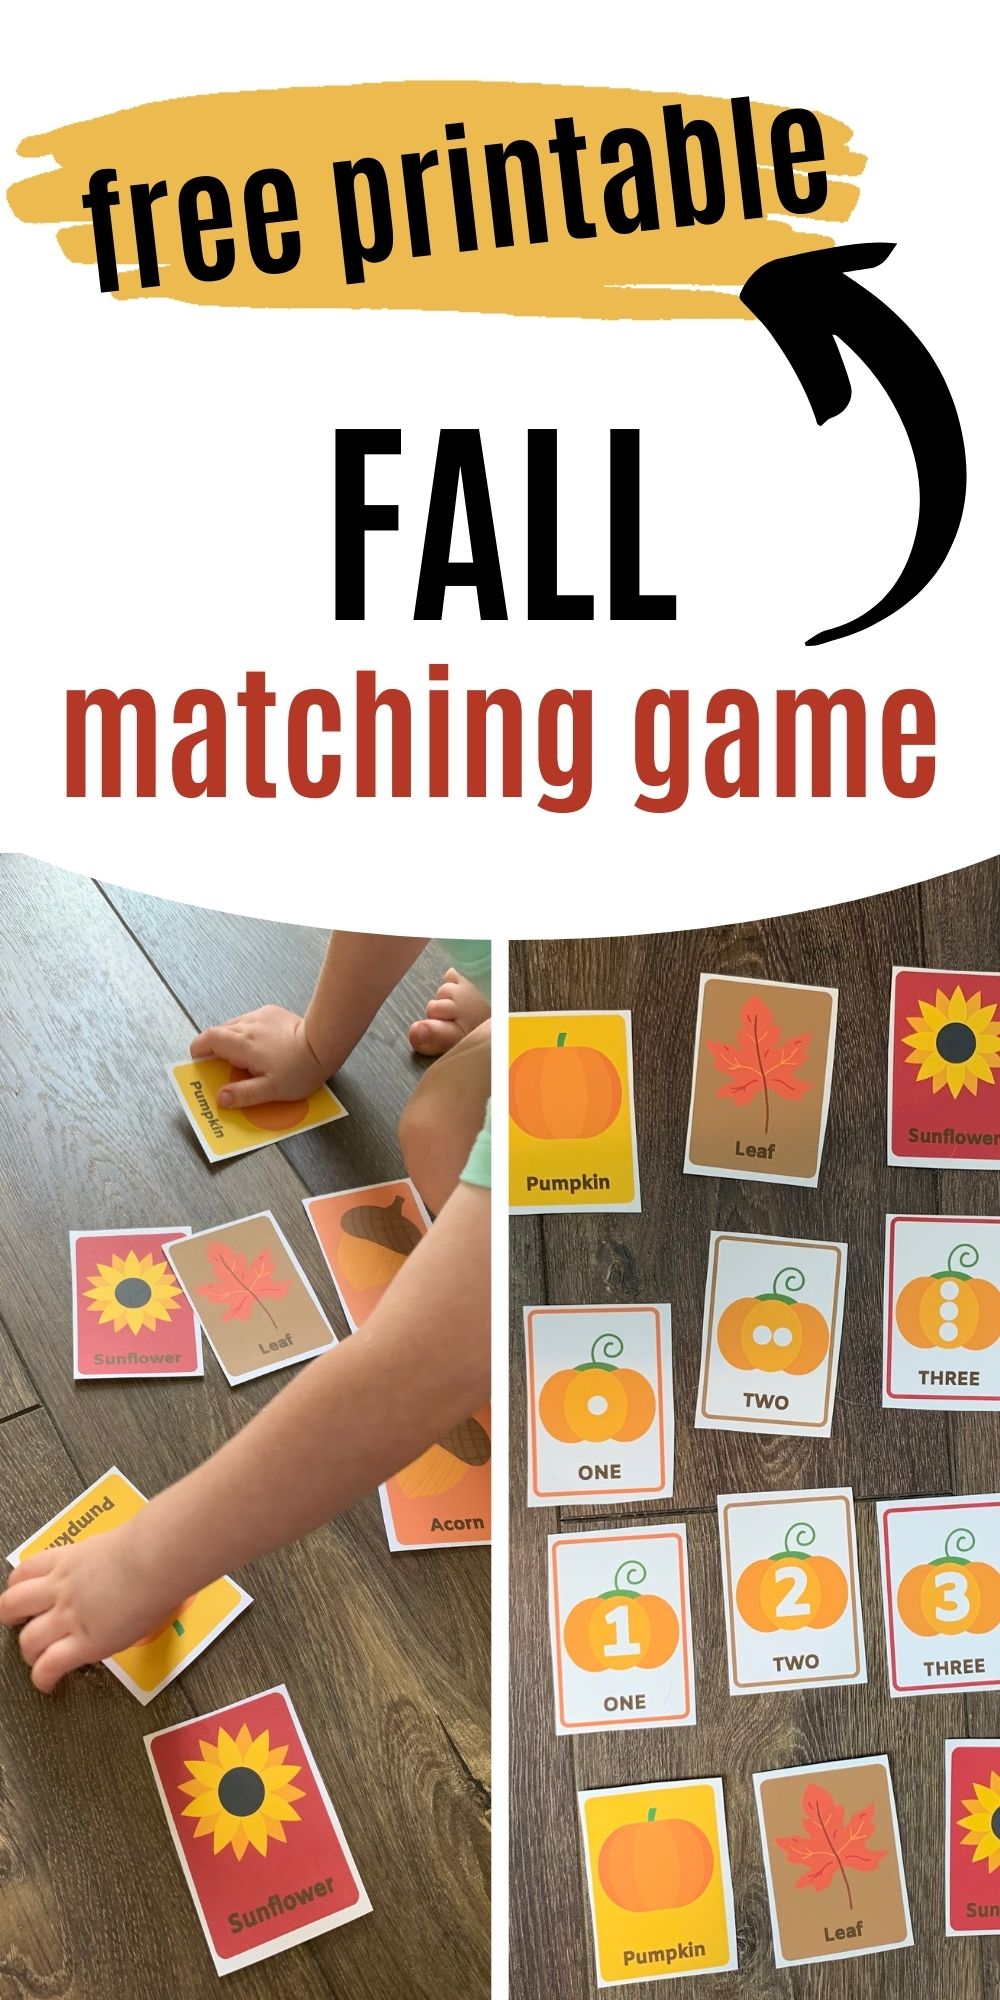 free printable fall matching game